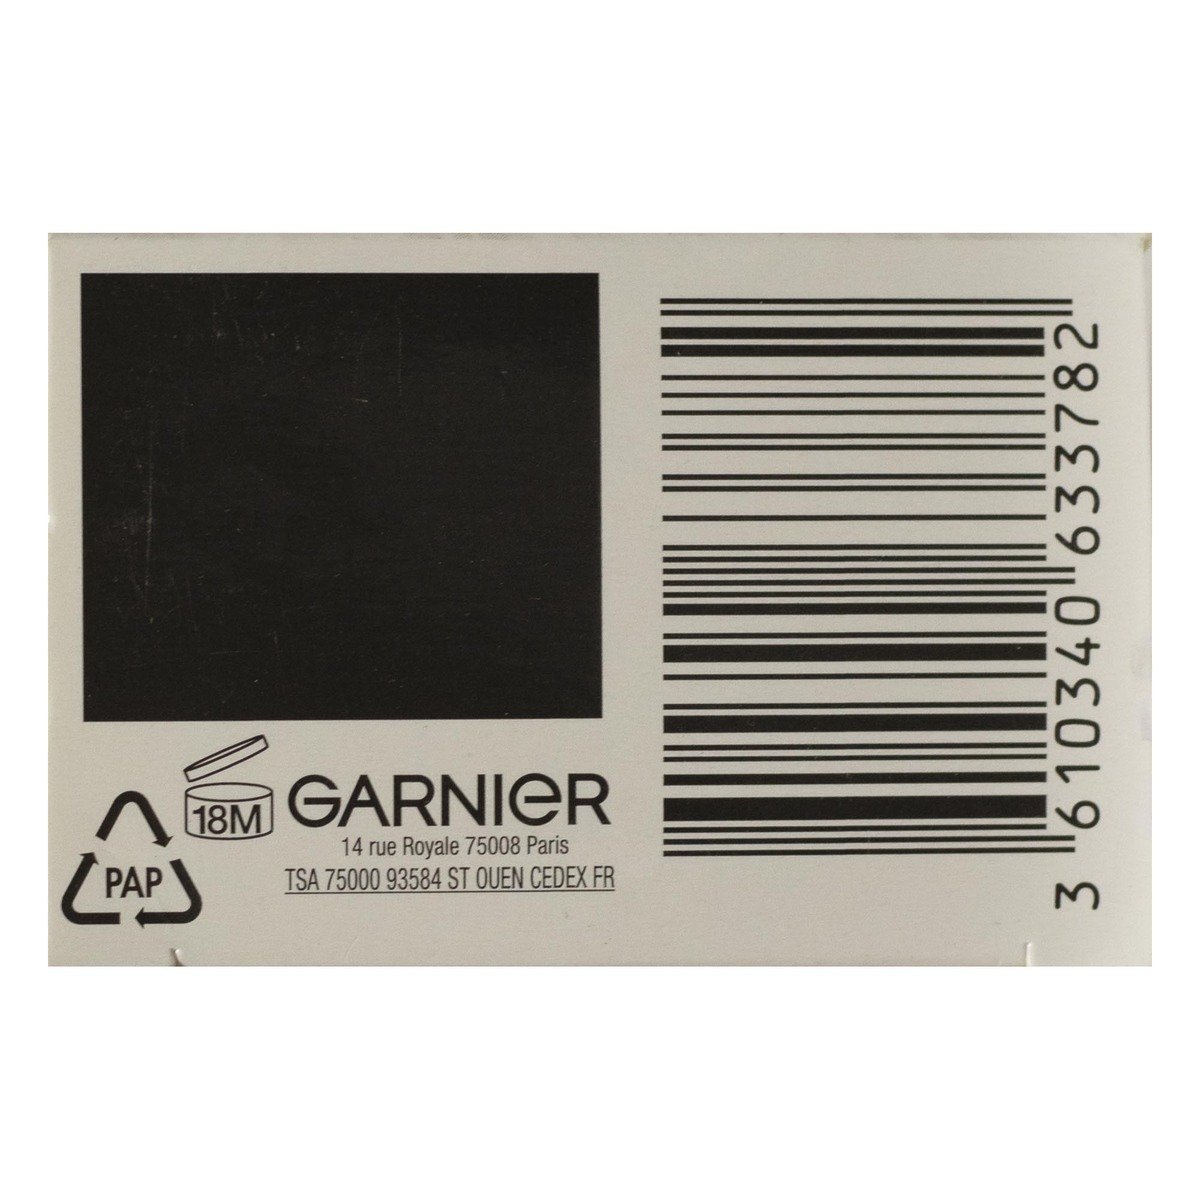 Garnier Color Naturals Creme Nourishing Permanent Hair Color Ashy Silver Blonde 1001 1 pkt